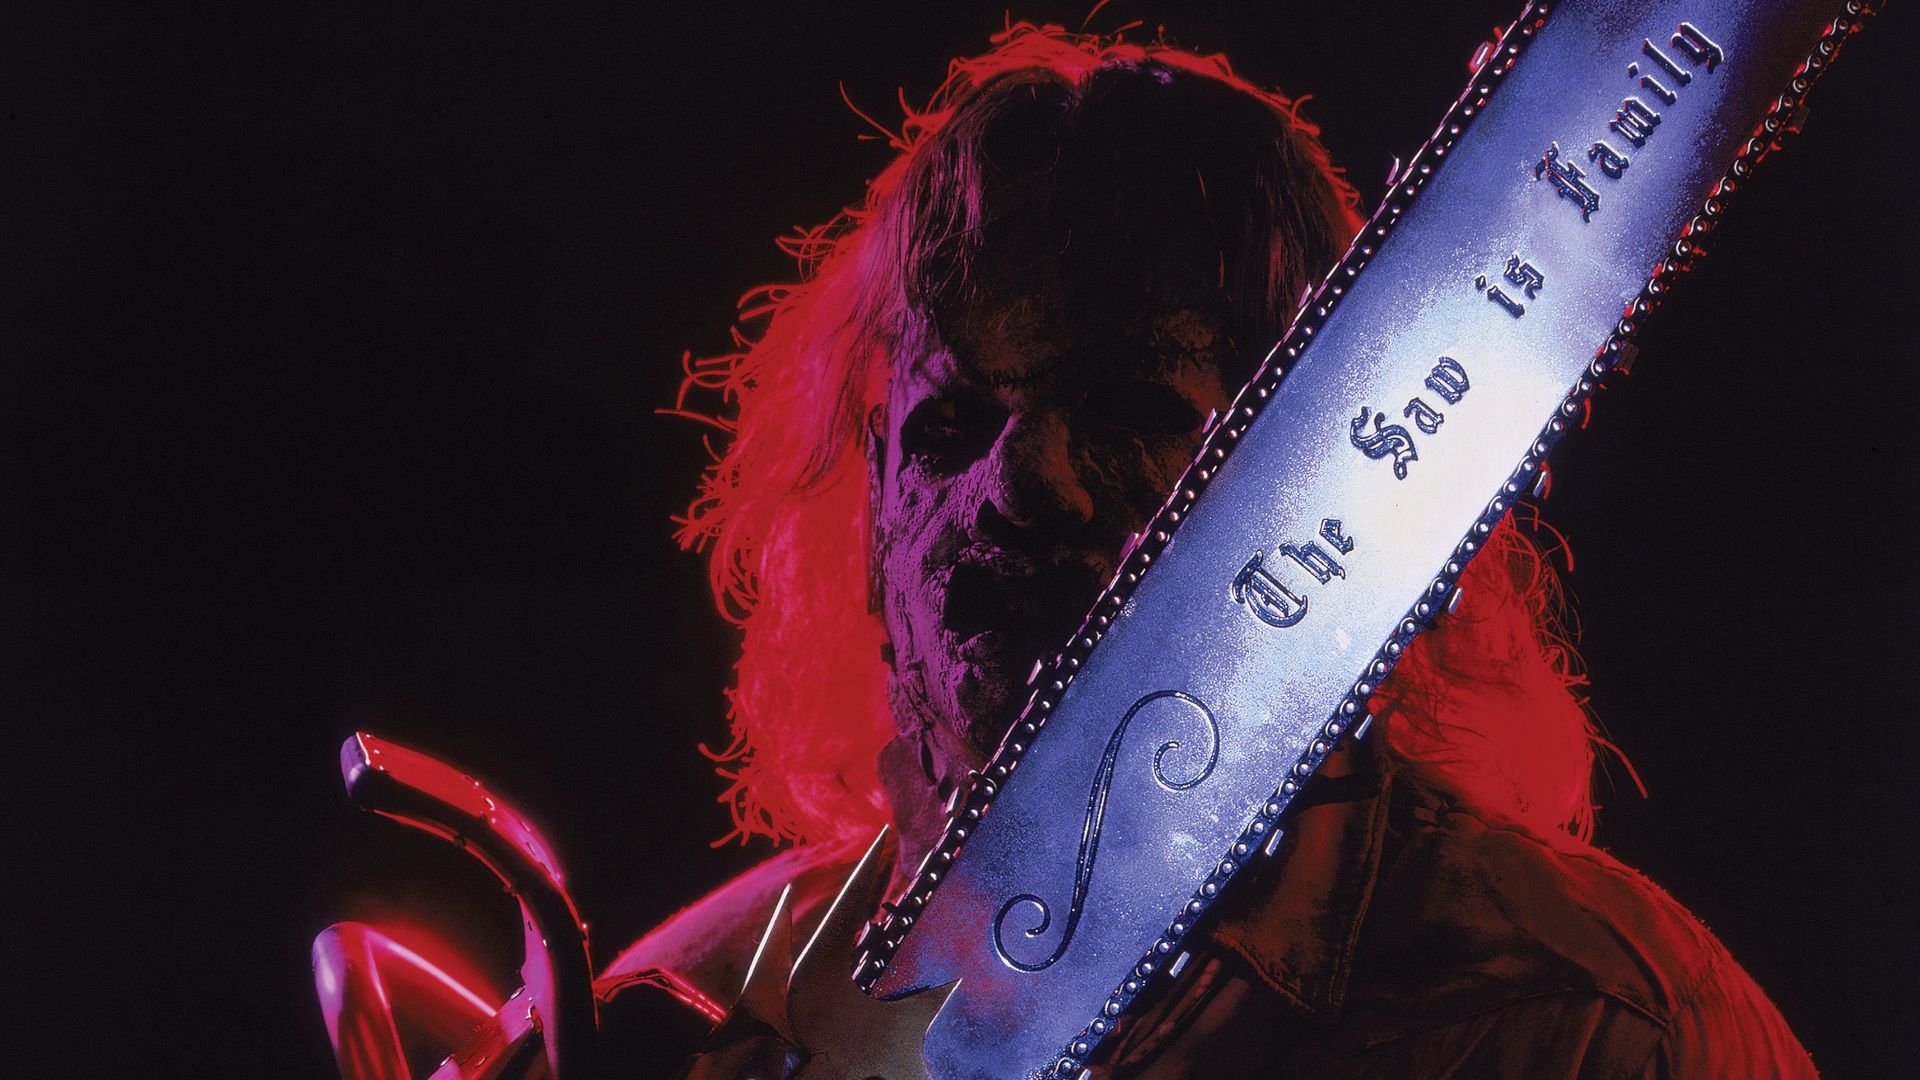 Leatherface: Texas Chainsaw Massacre III background